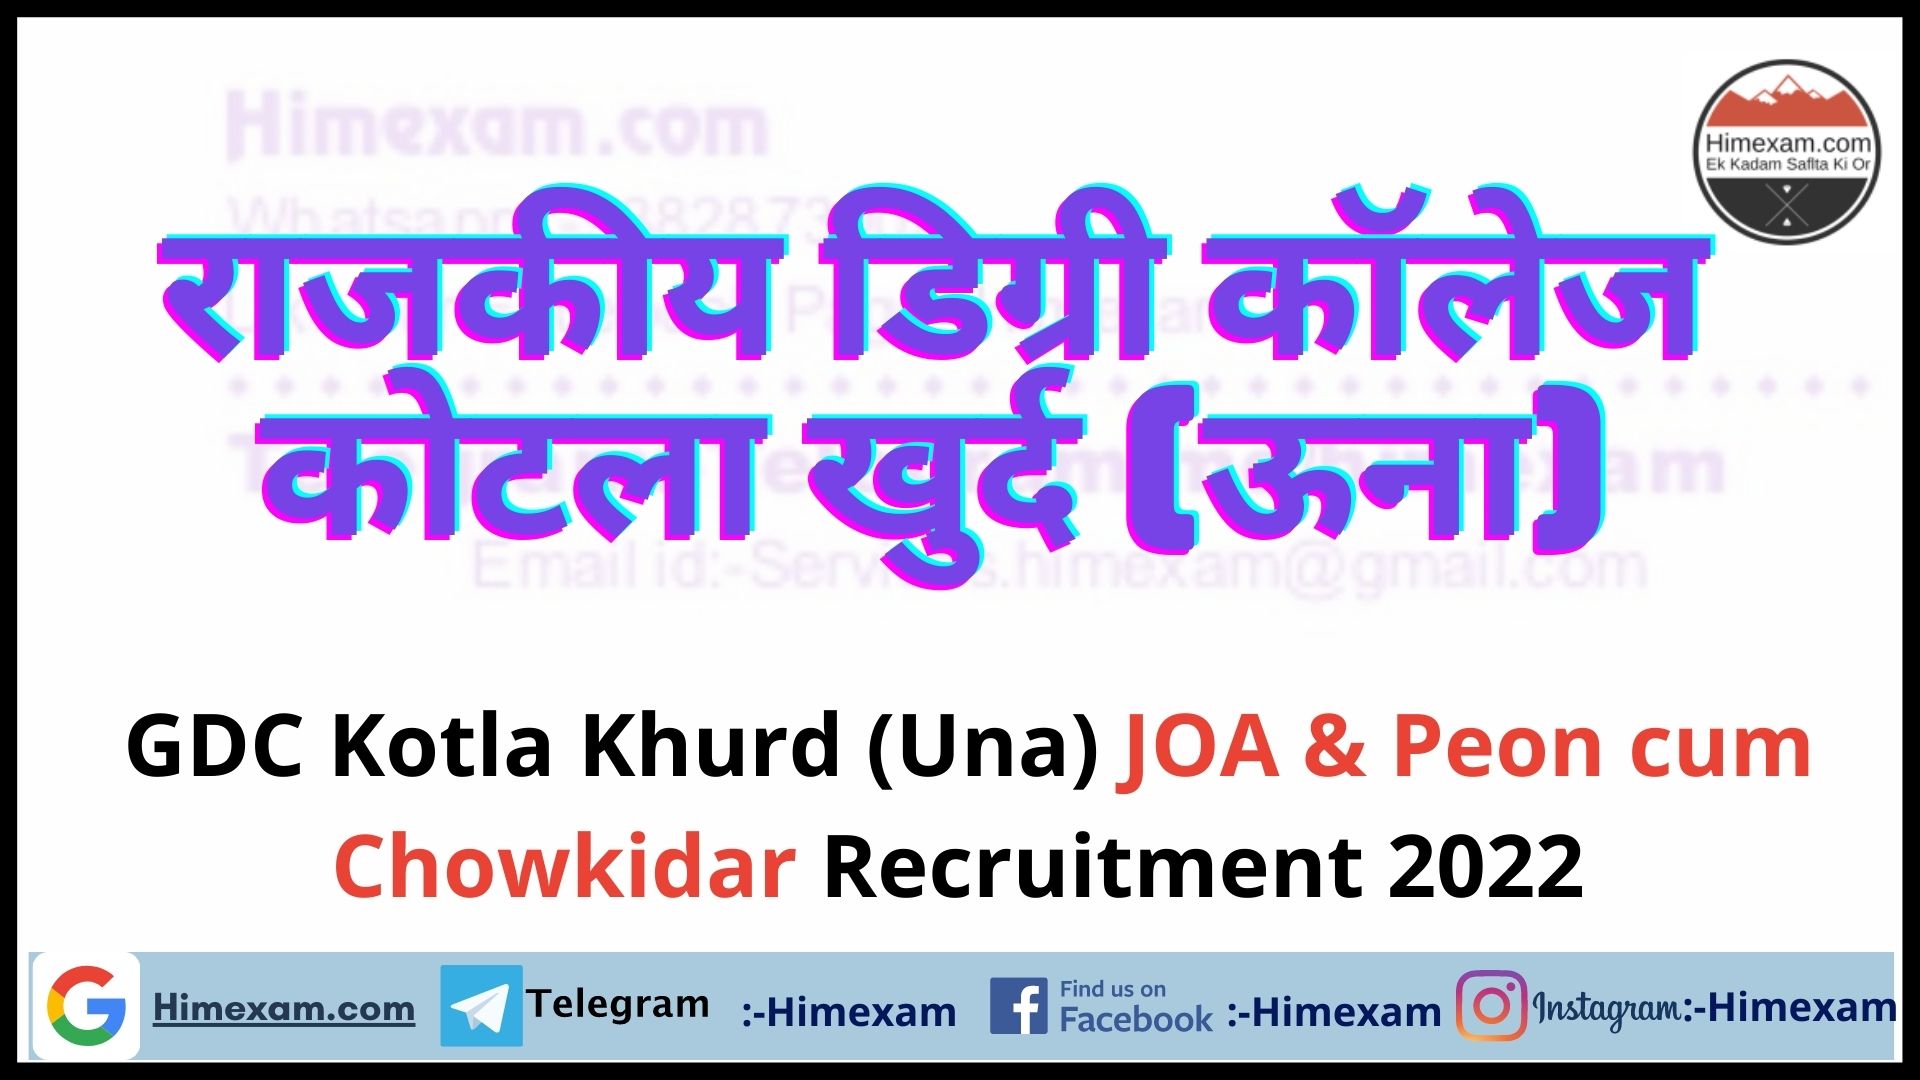 GDC Kotla Khurd (Una) JOA & Peon cum Chowkidar Recruitment 2022